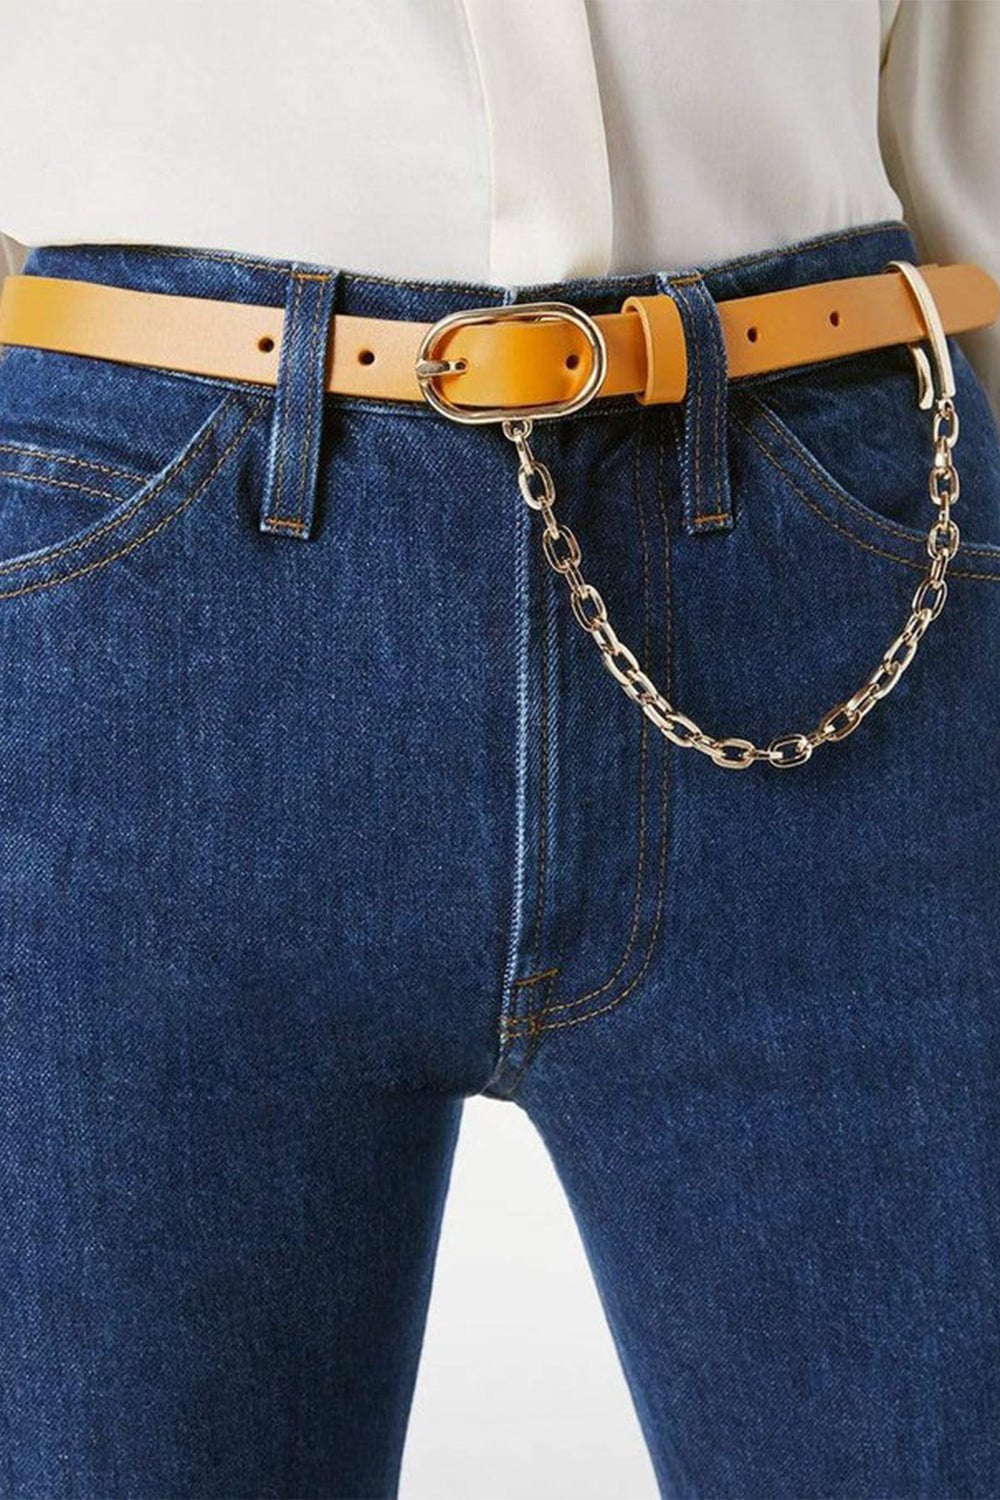 1 PC Women's Chain Belt Metal Waist Chain Dress Belts Metal Belt Adjustable  - AliExpress